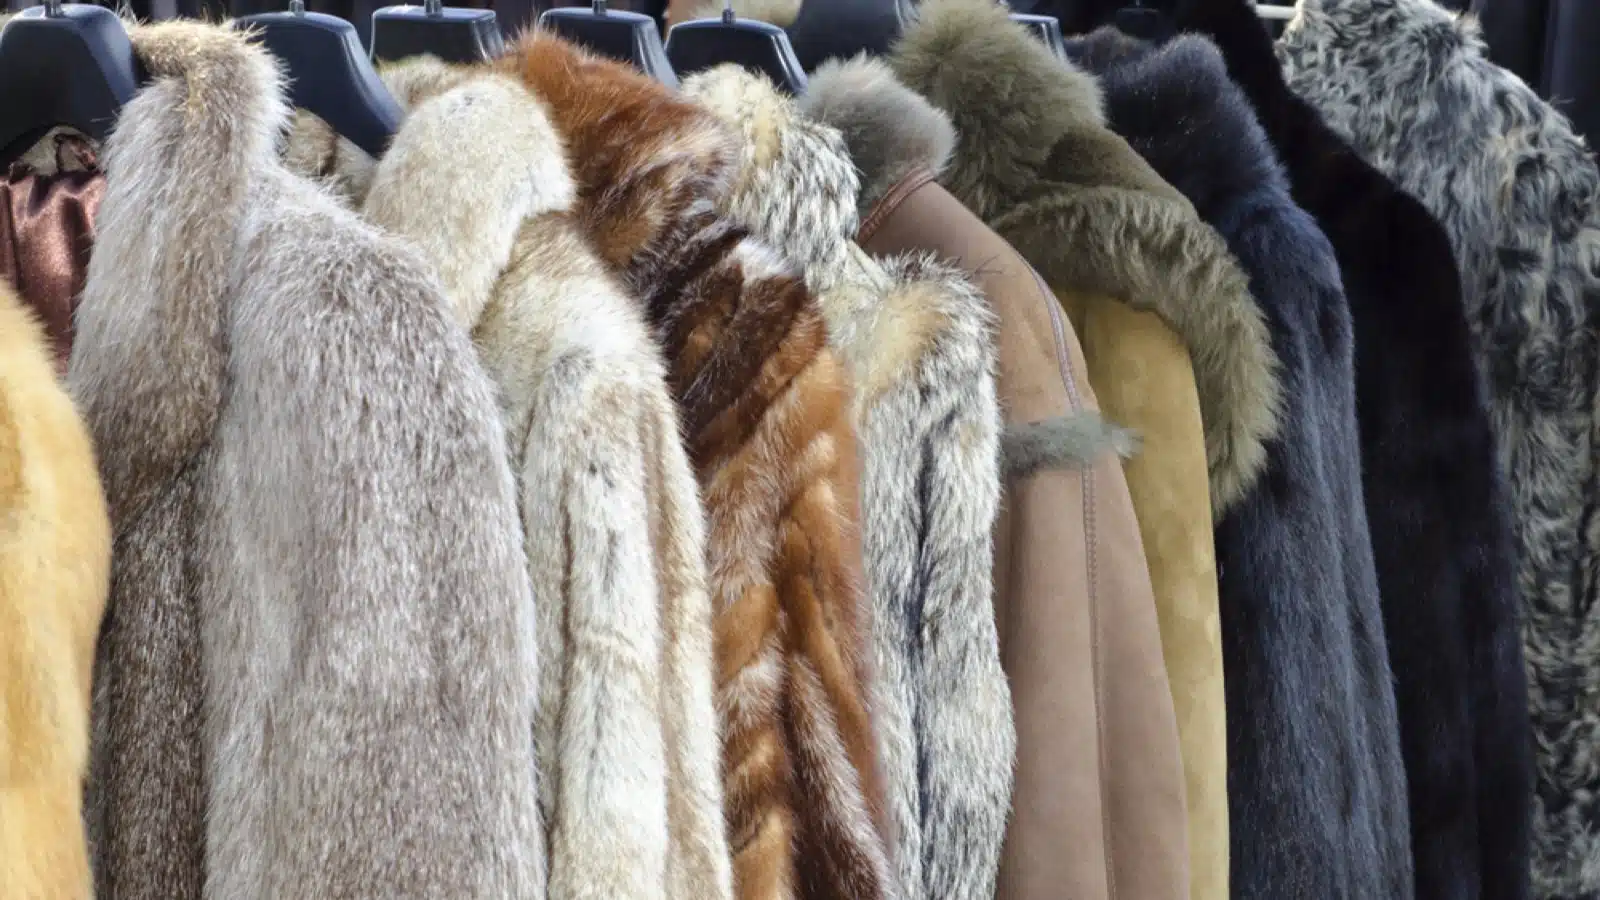 Coats made of animal fur